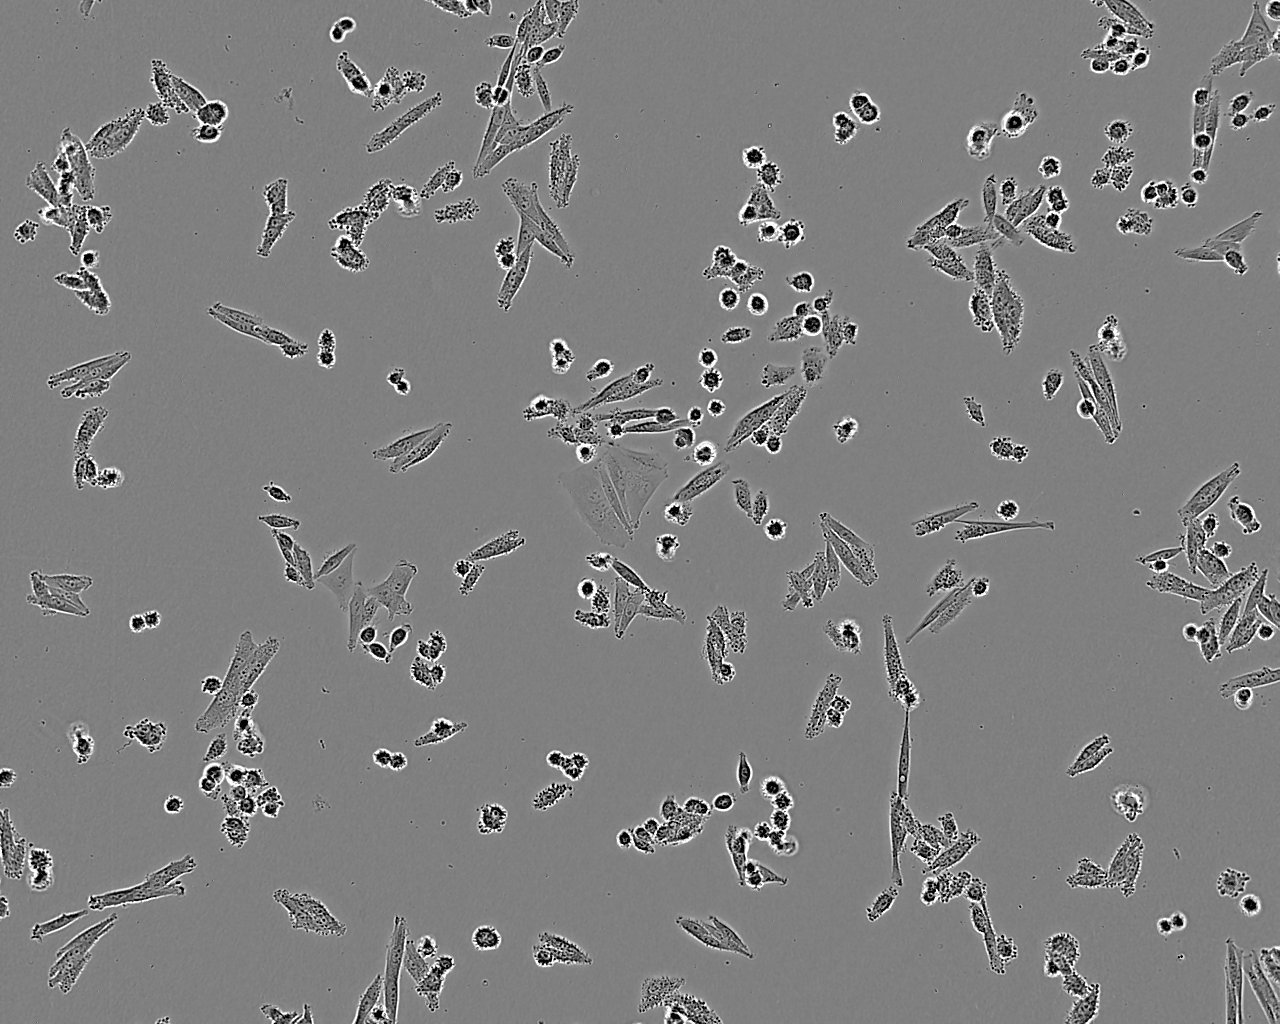 HEK293-FT细胞：表达SV40T抗原人胚肾上皮细胞系